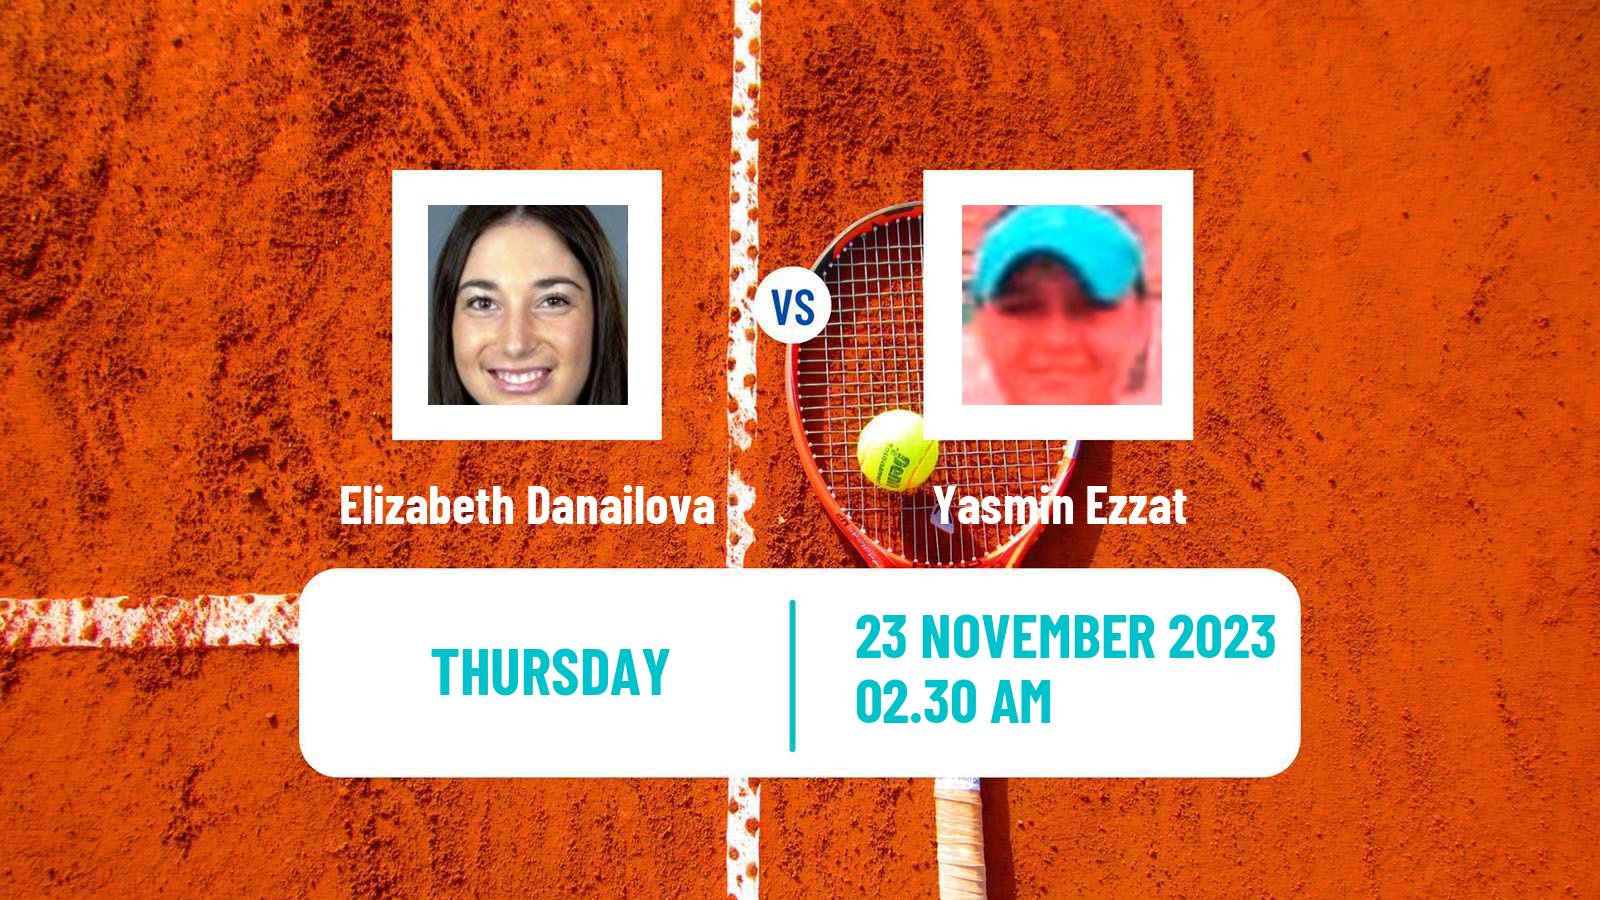 Tennis ITF W15 Sharm Elsheikh 19 Women Elizabeth Danailova - Yasmin Ezzat